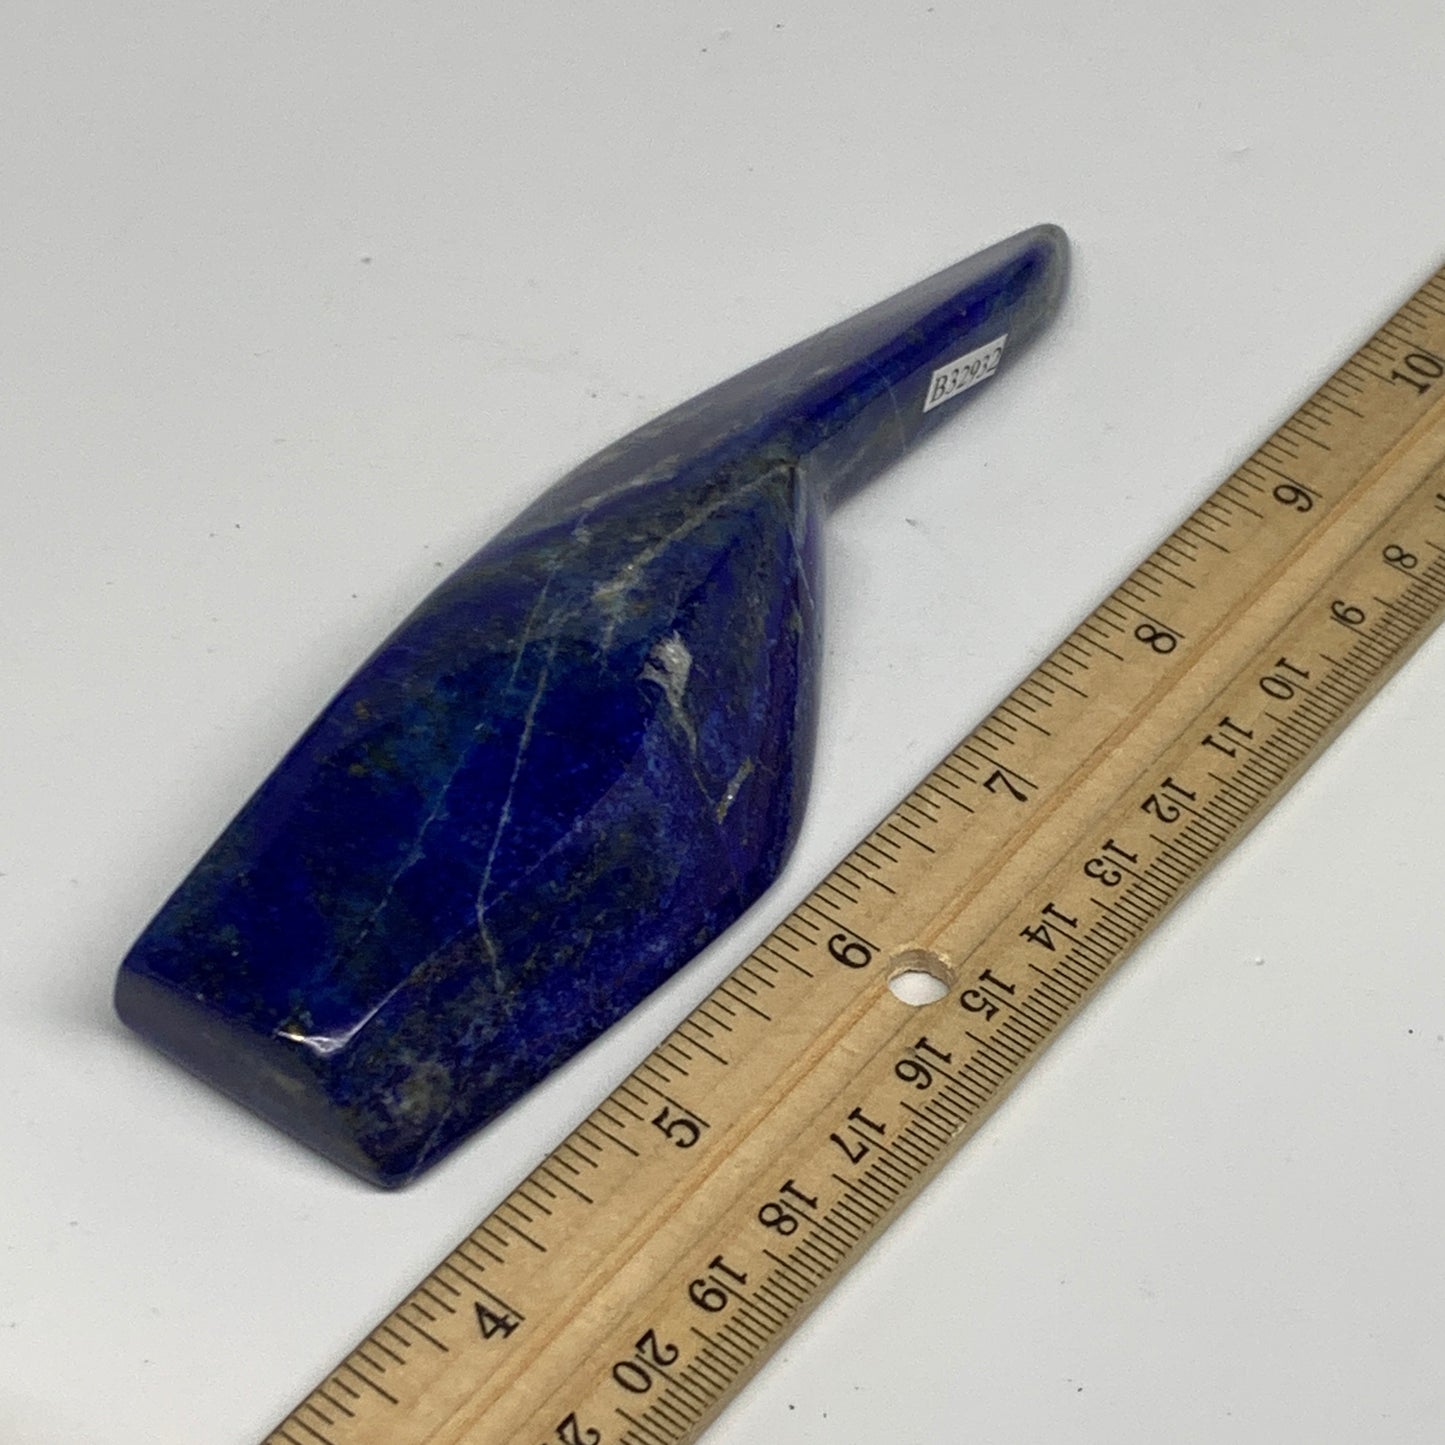 157.6g, 5.7"x1.7"x0.8", Natural Freeform Lapis Lazuli from Afghanistan, B32932